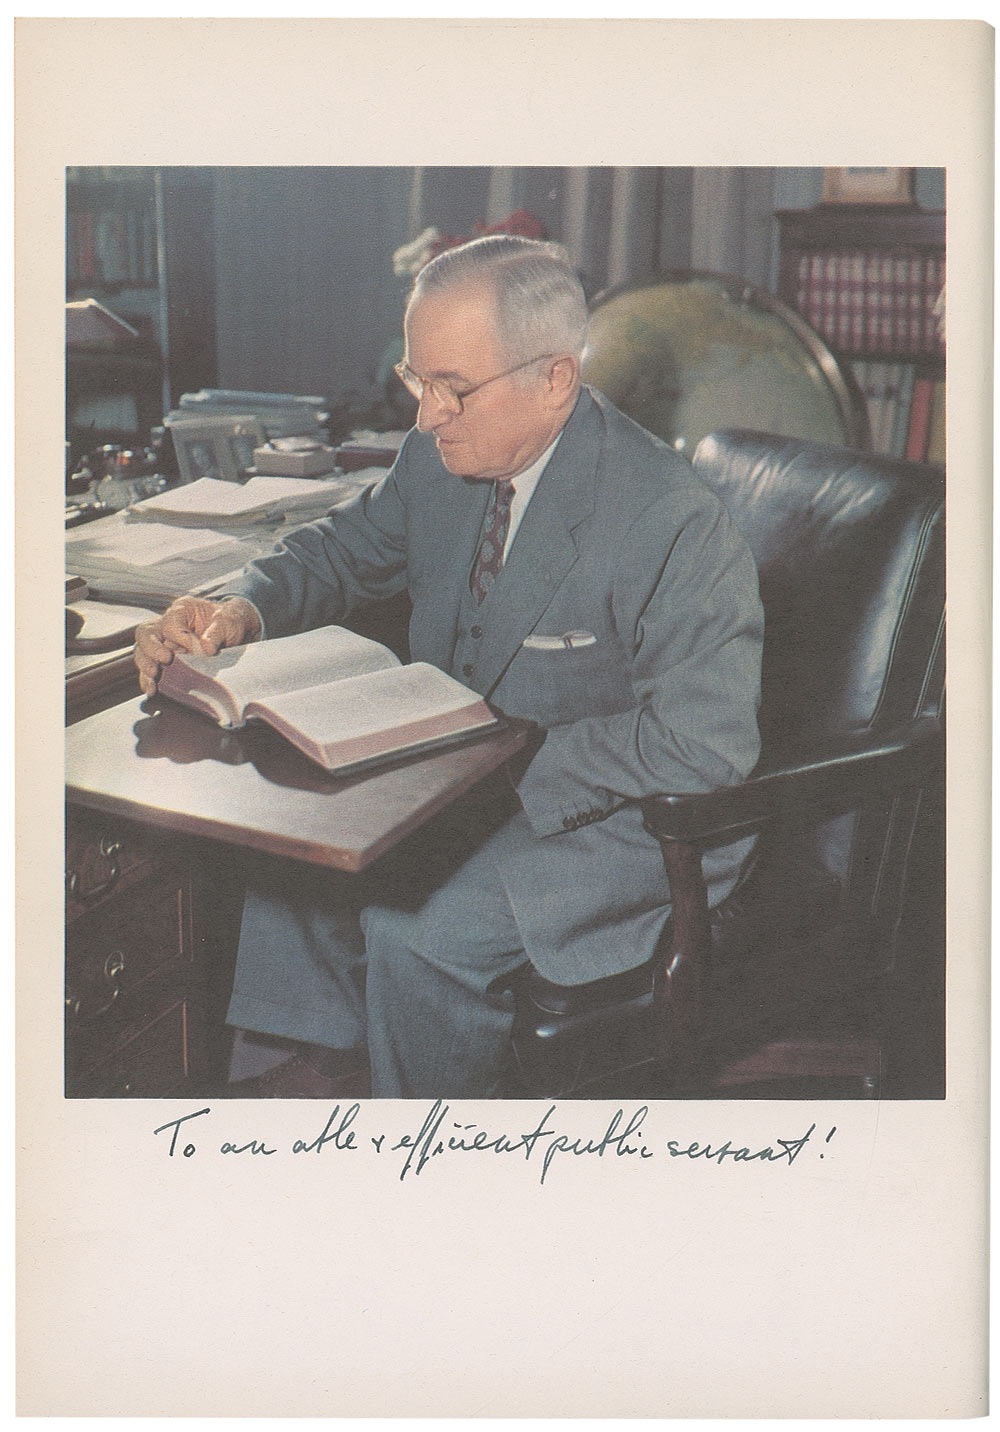 Lot #145 Harry S. Truman